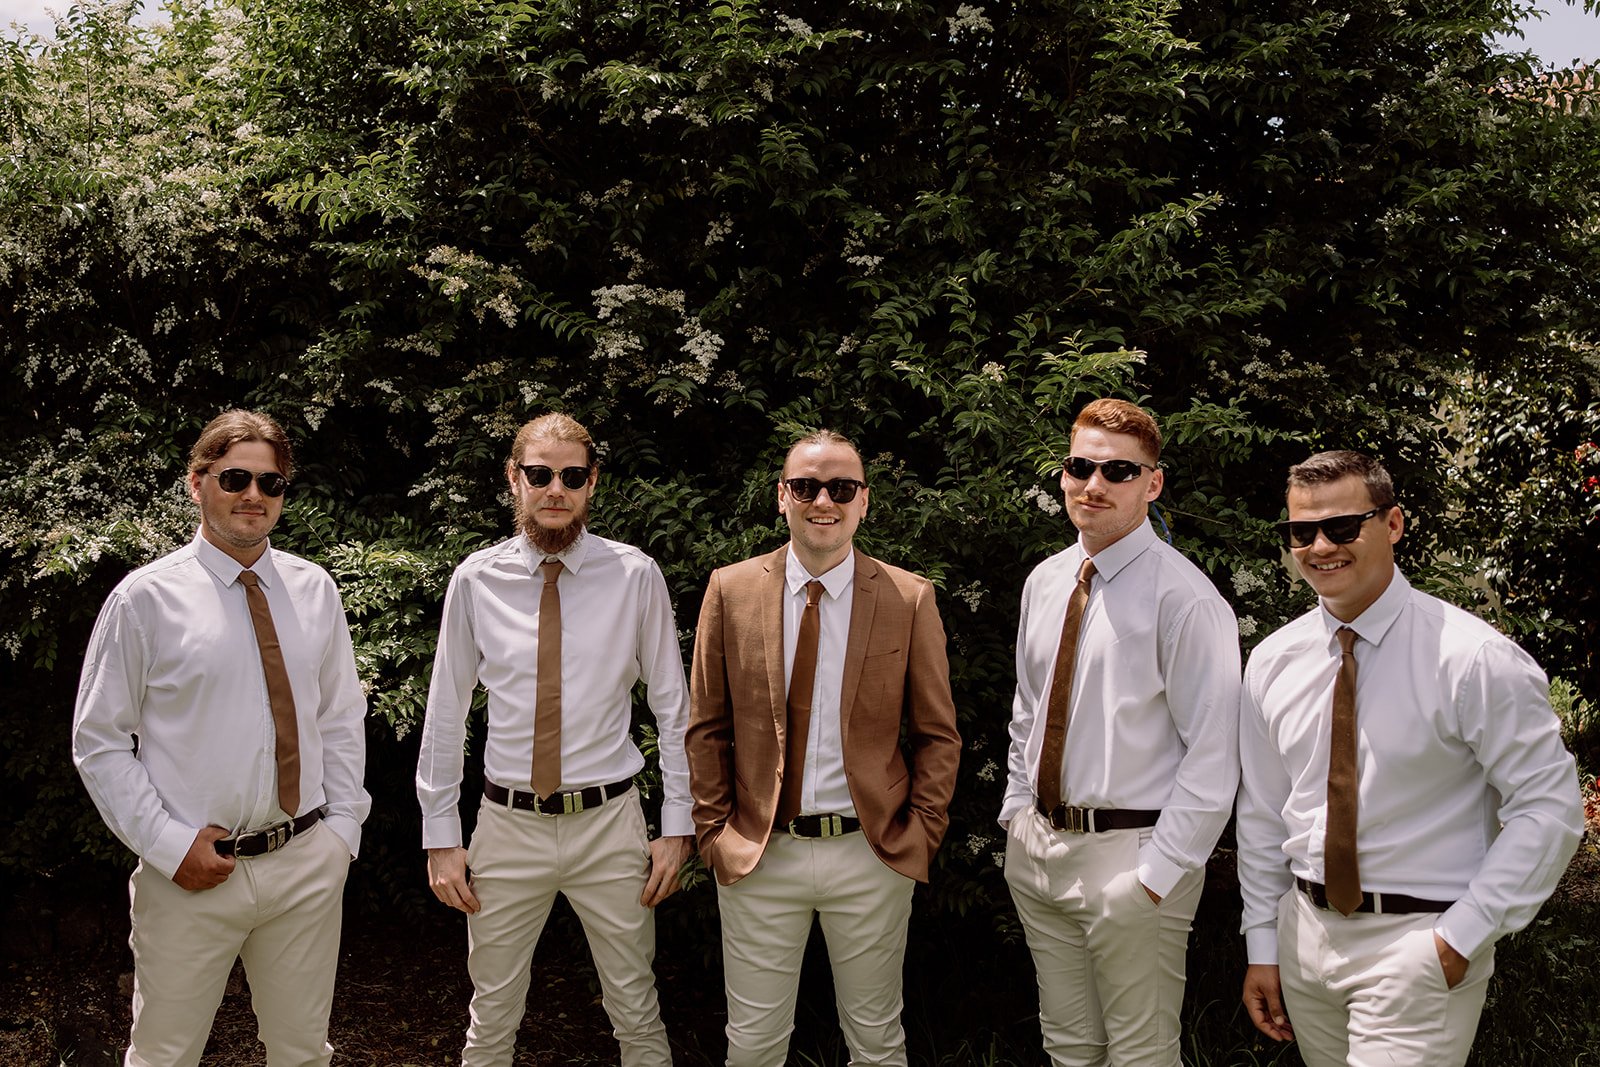 Groom and groomsmen standing together wearing cream pants and earthy brown tie